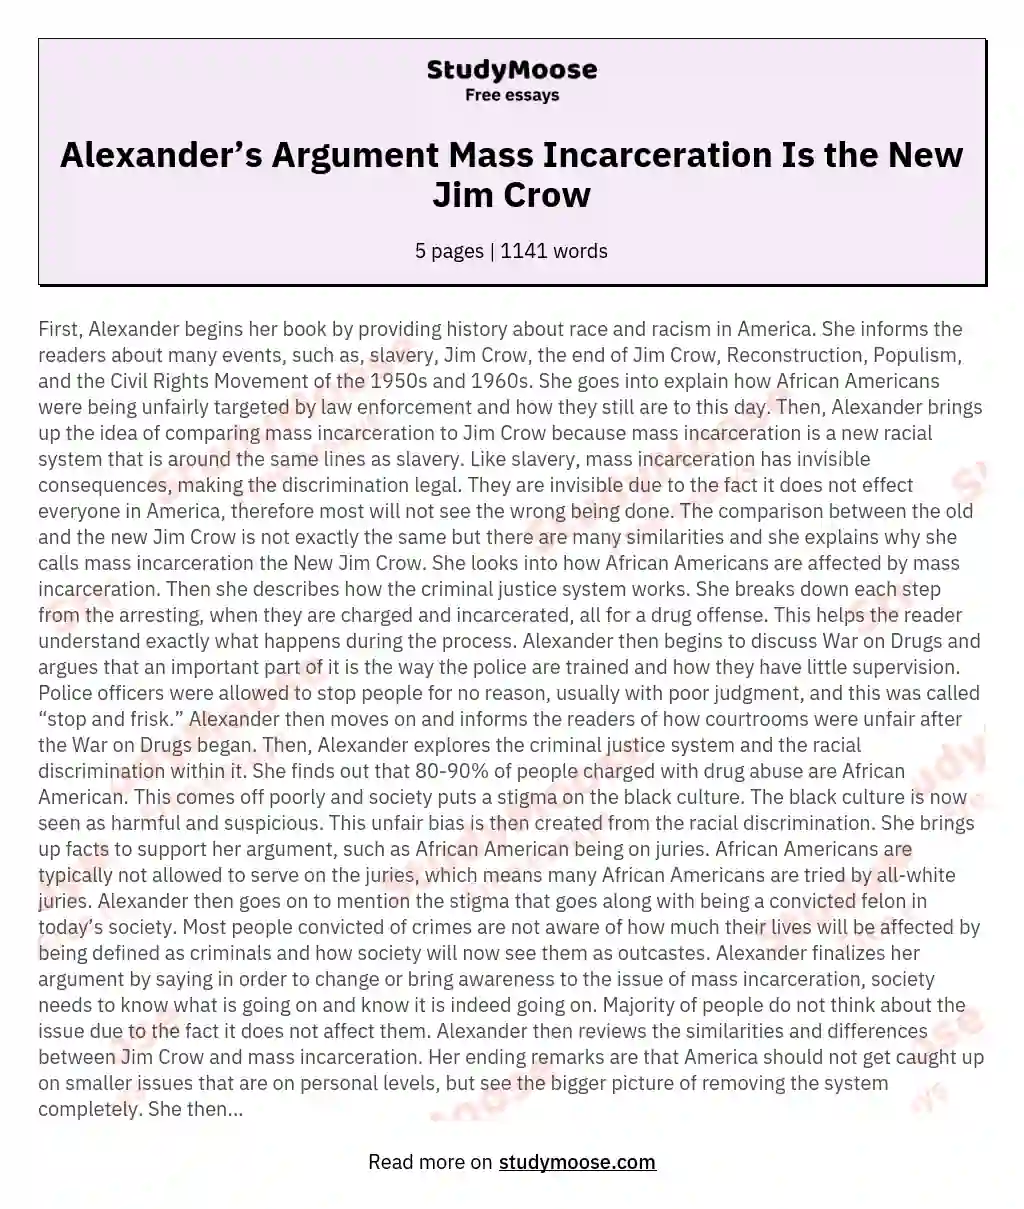 Alexander’s Argument Mass Incarceration Is the New Jim Crow essay